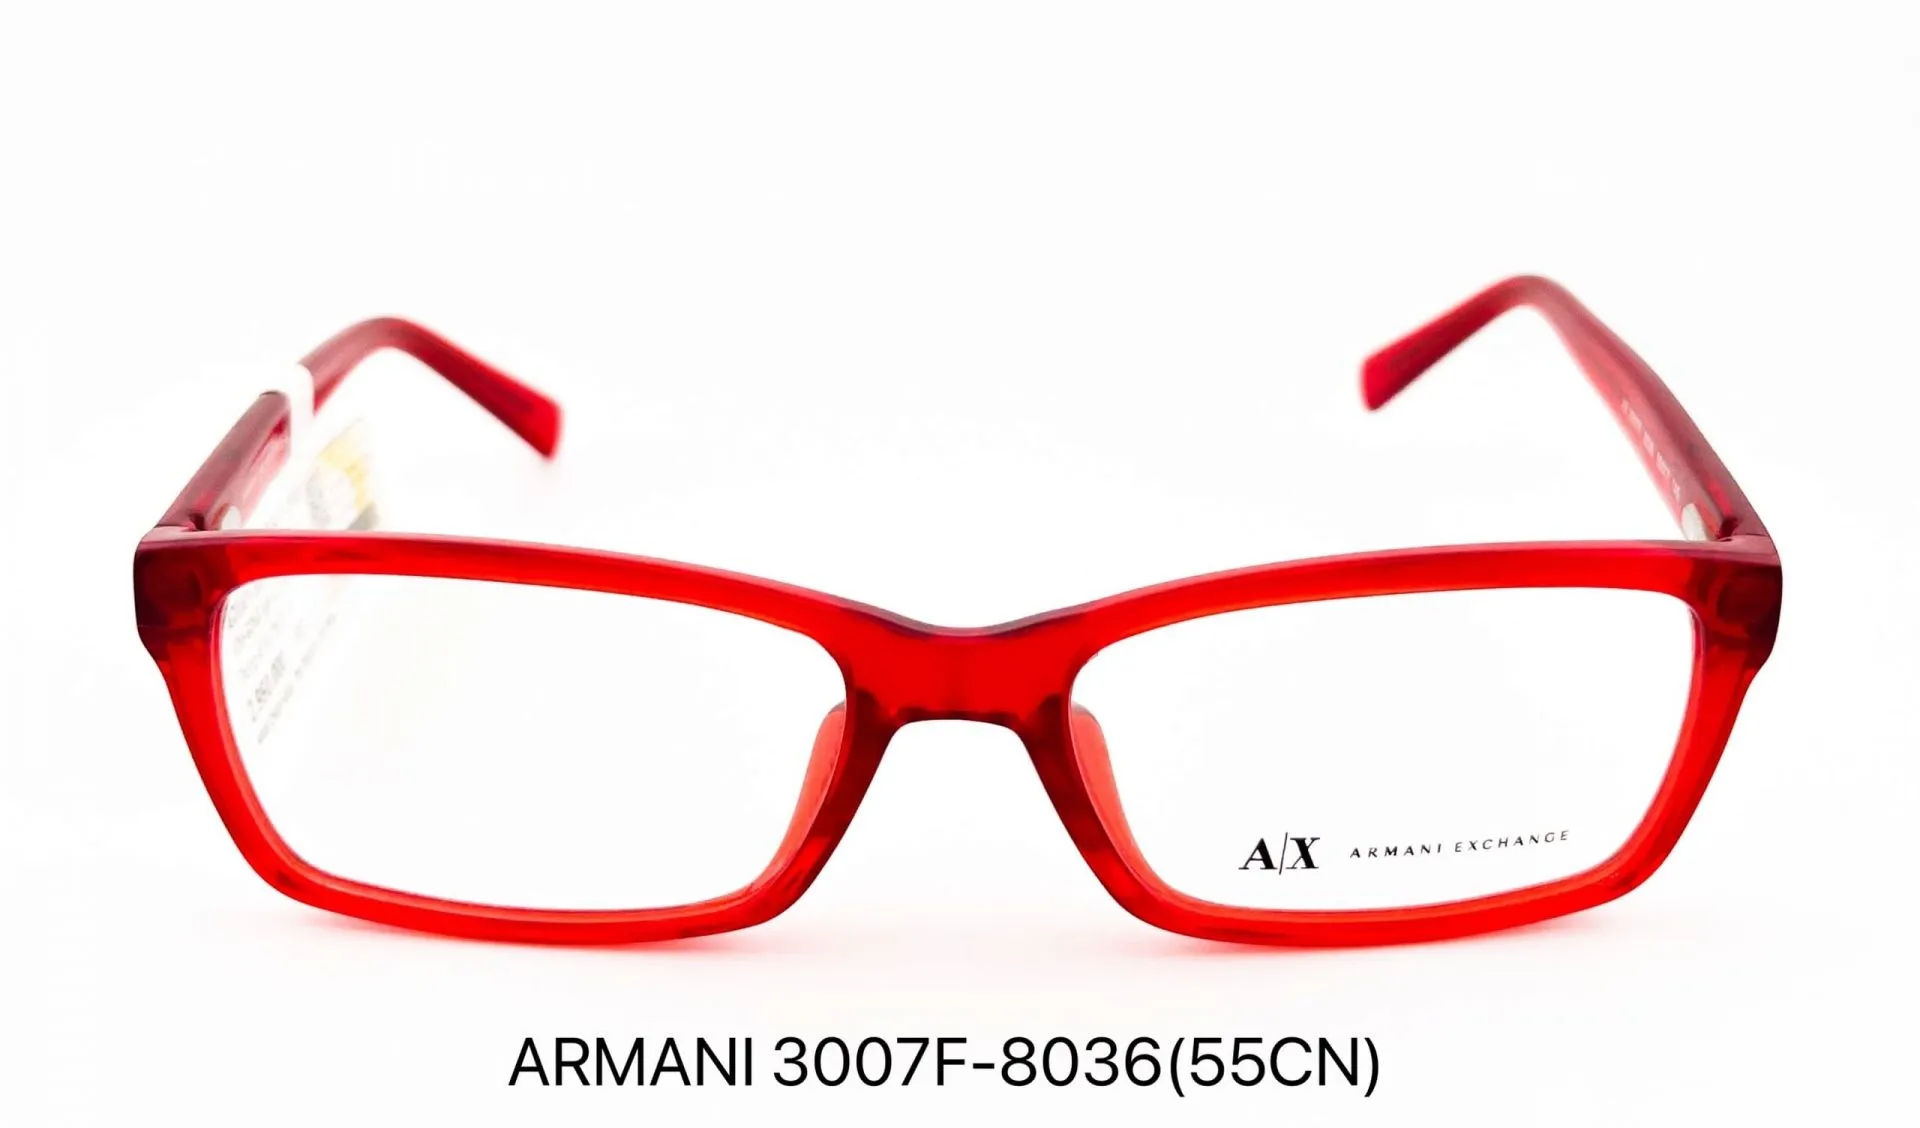 Gọng kính ARMANI EXCHANGE 3007F-8036 (55CN)